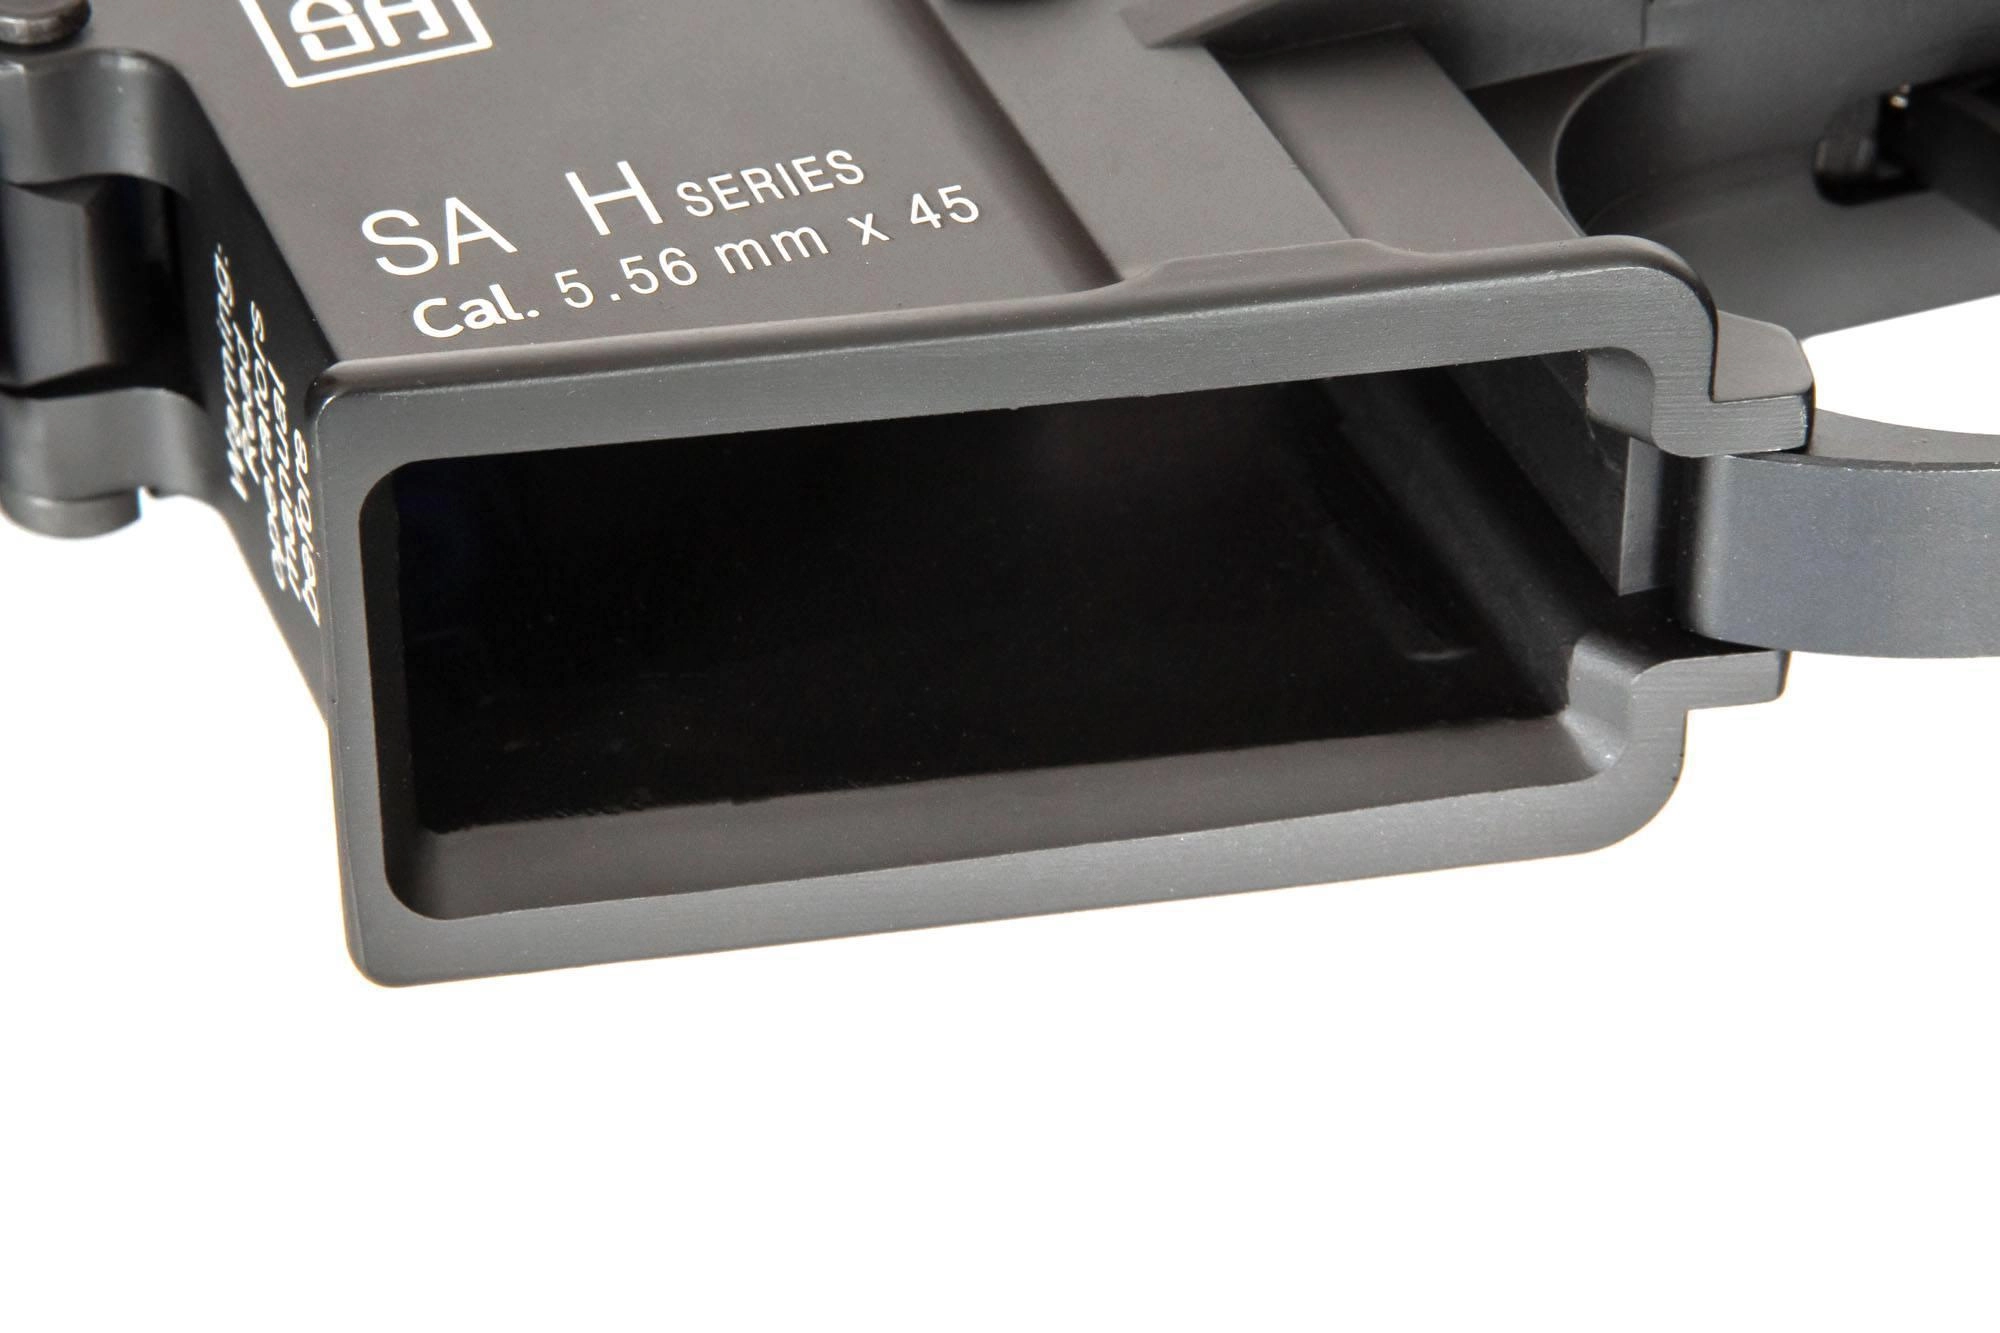 Specna Arms SA-H11 ONE sähköase, metallinen - musta